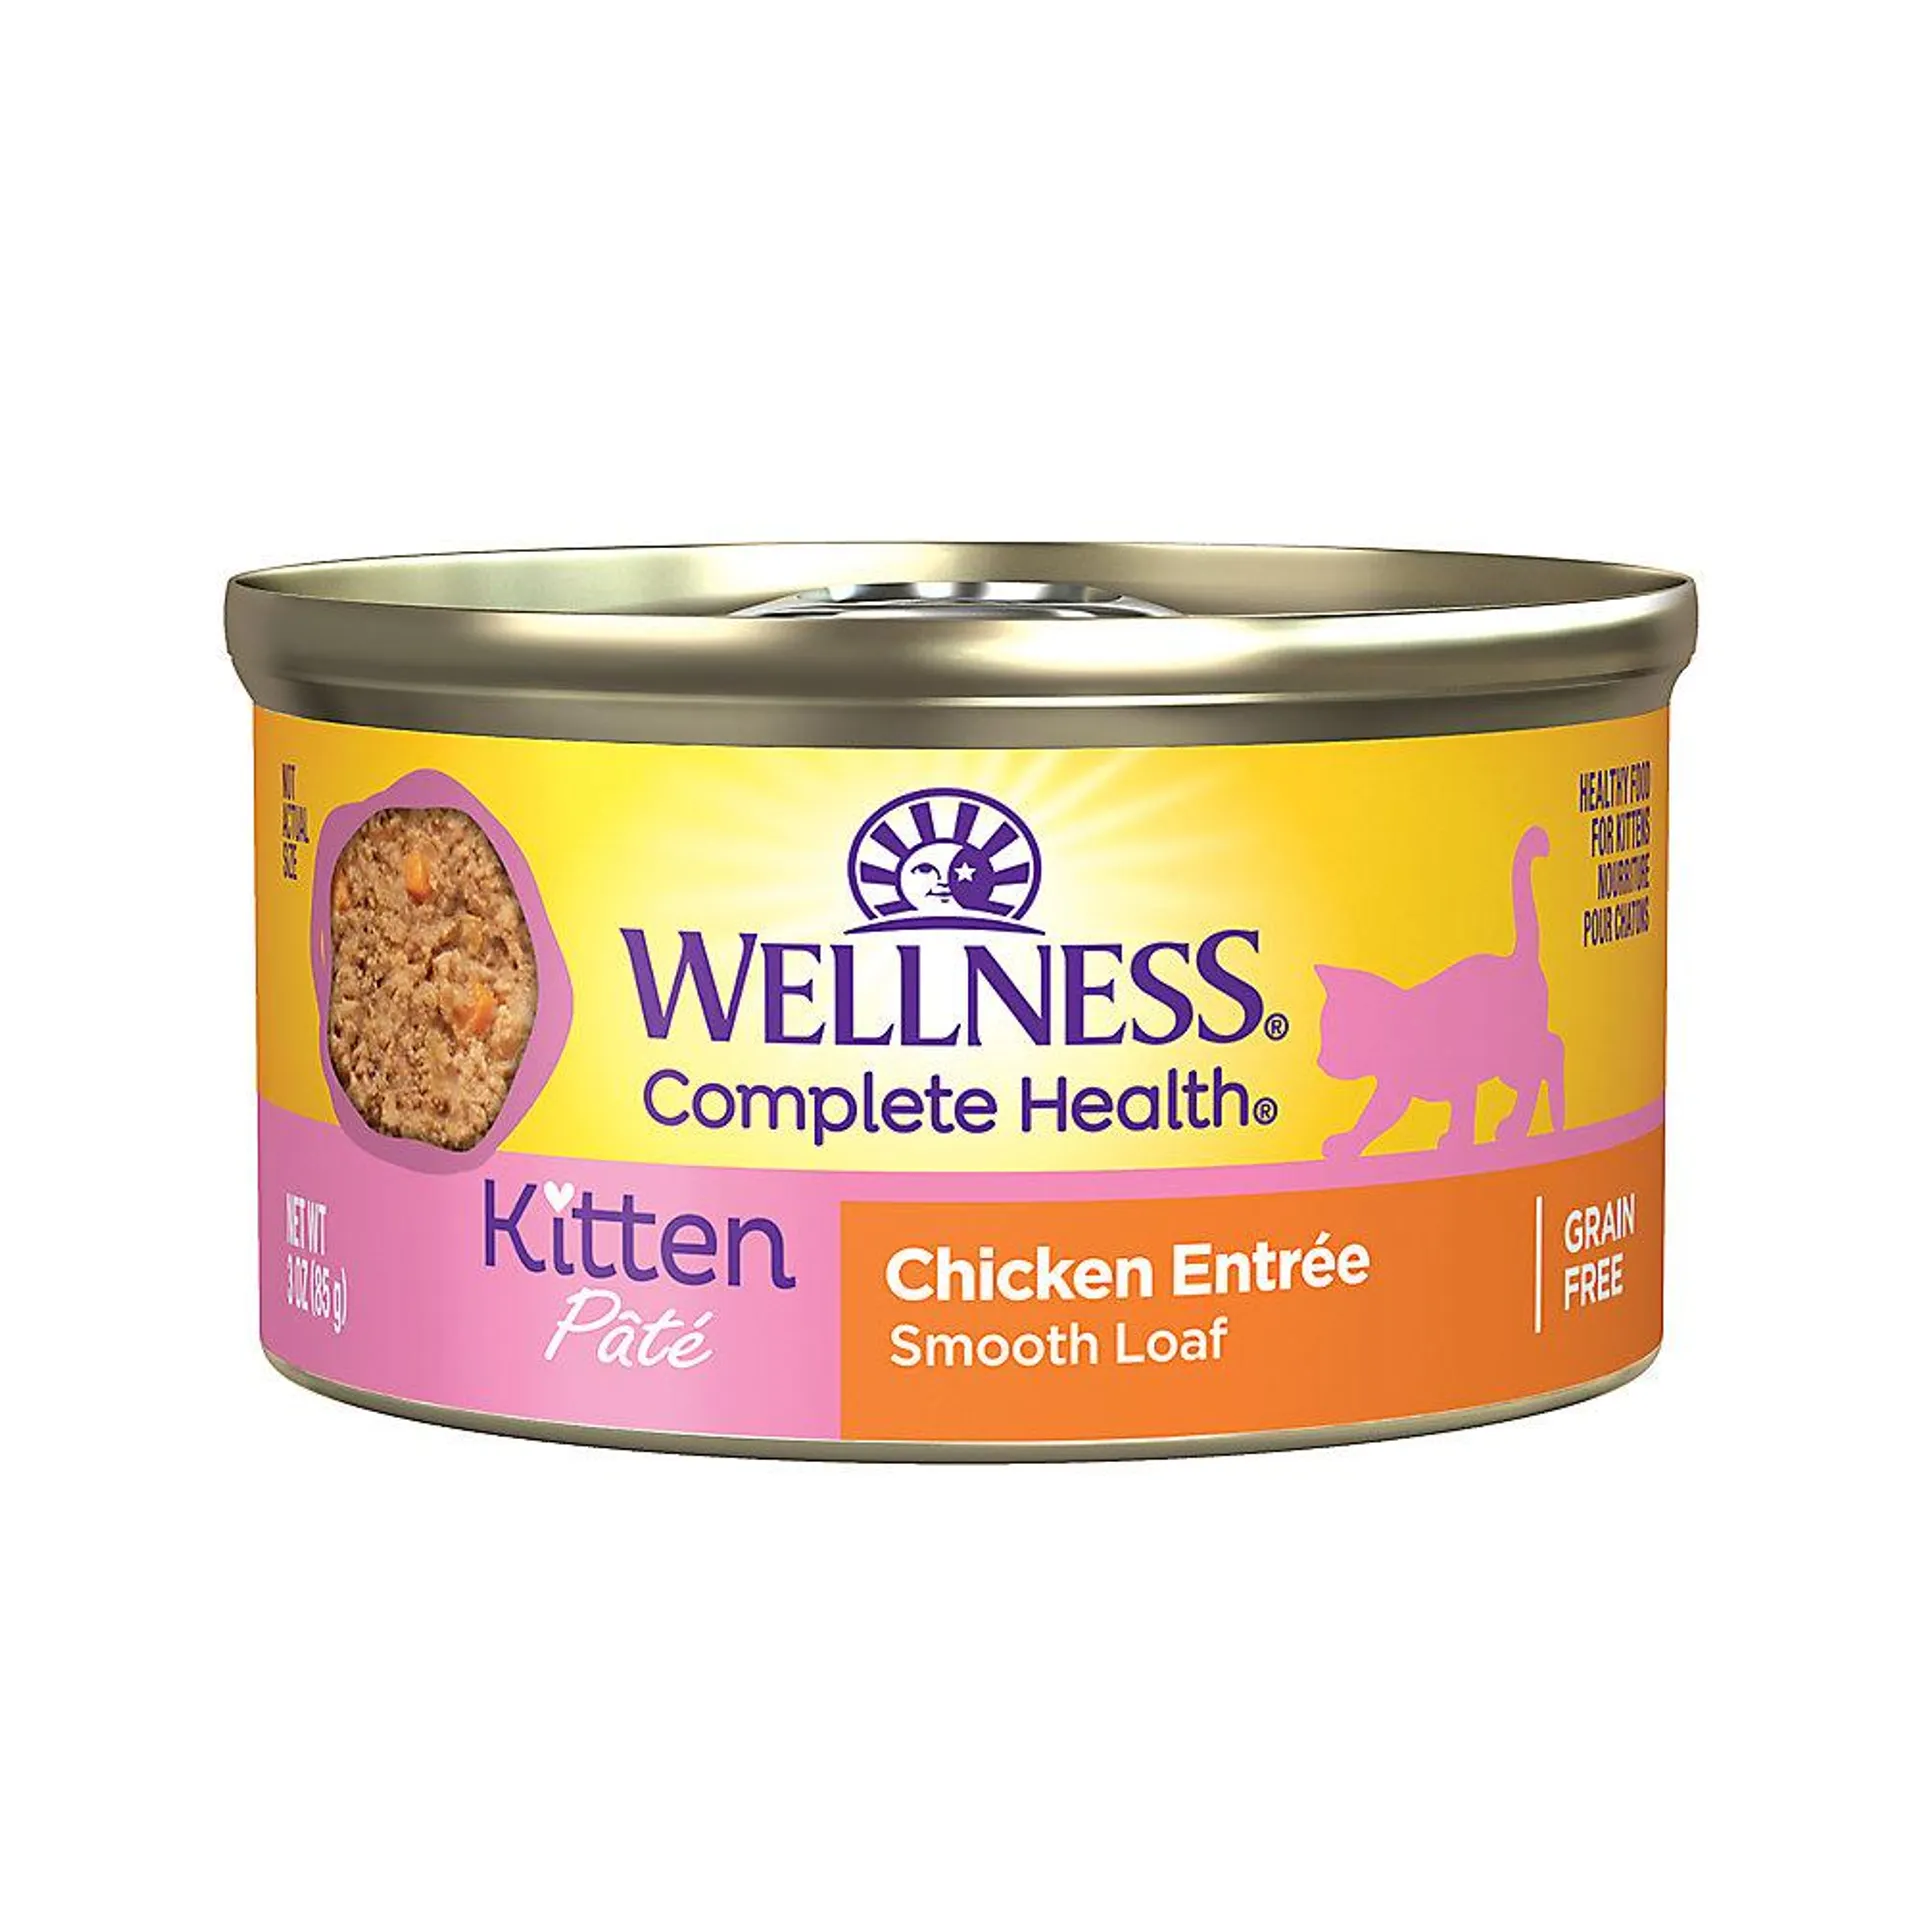 Wellness® Complete Health Kitten Wet Cat Food Pate - 3 oz, Natural, Grain Free